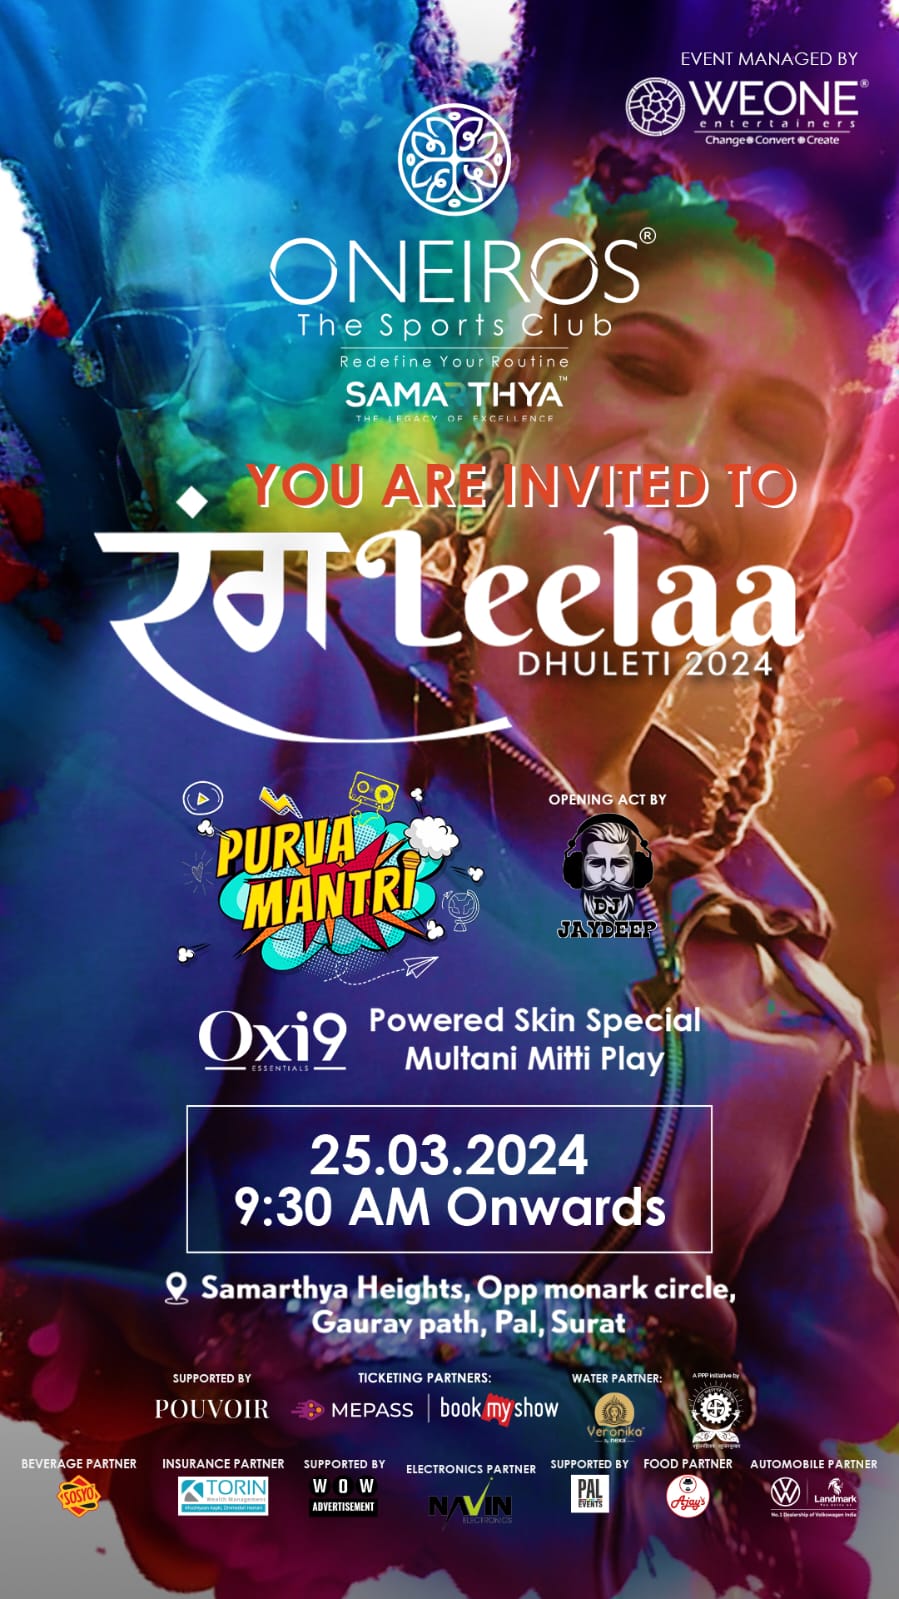 Rang-Leela Dhuleti 2024, Oneiros the Sports Club, unique Holi festival, Surat, oxi9 Multani Mitti Play Arena, Miss Purva Mantri,